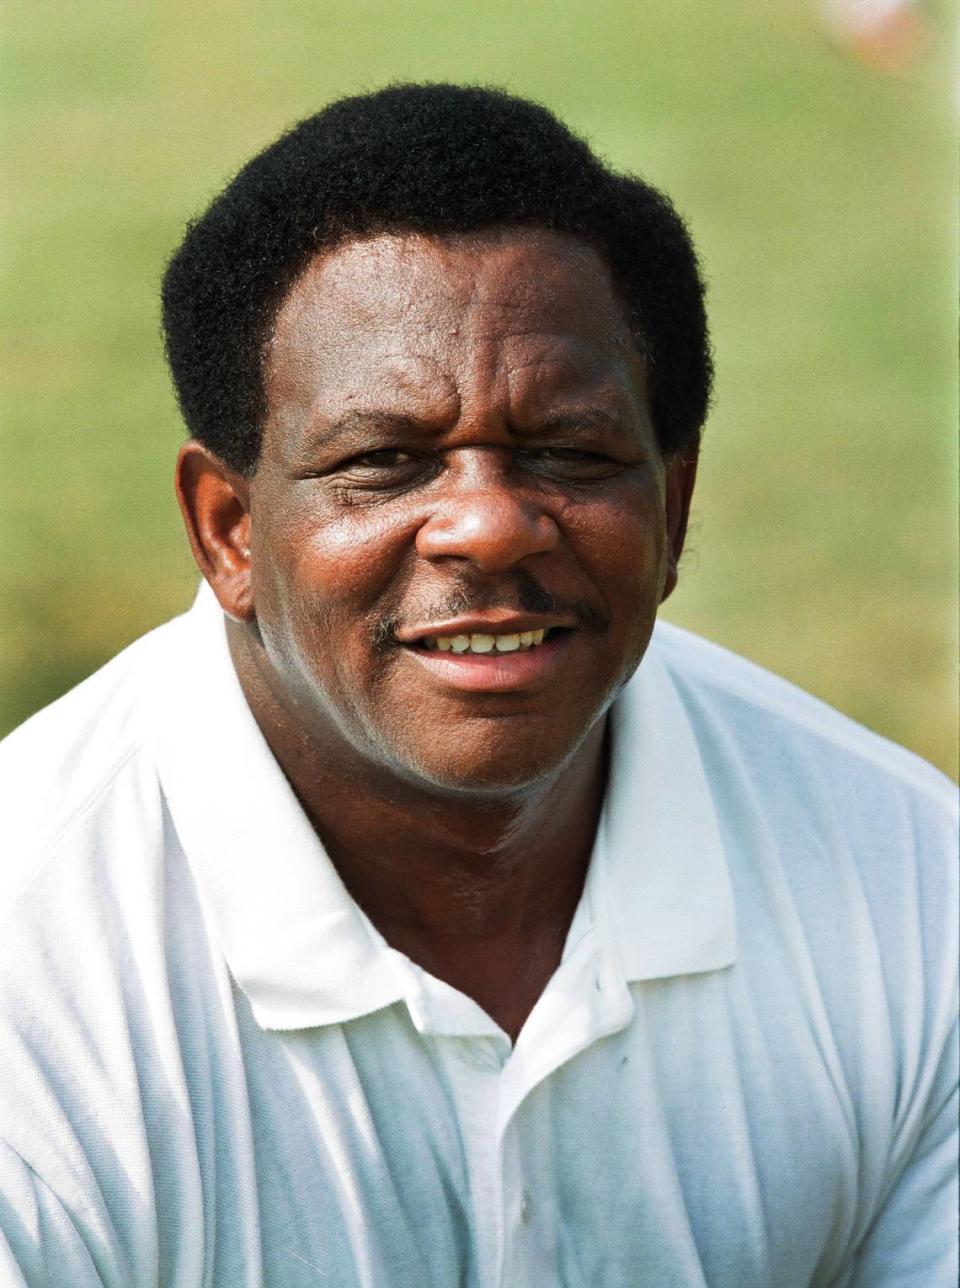 Wallace Davis was the longtime head football coach at Carver High School in Columbus, Georgia.